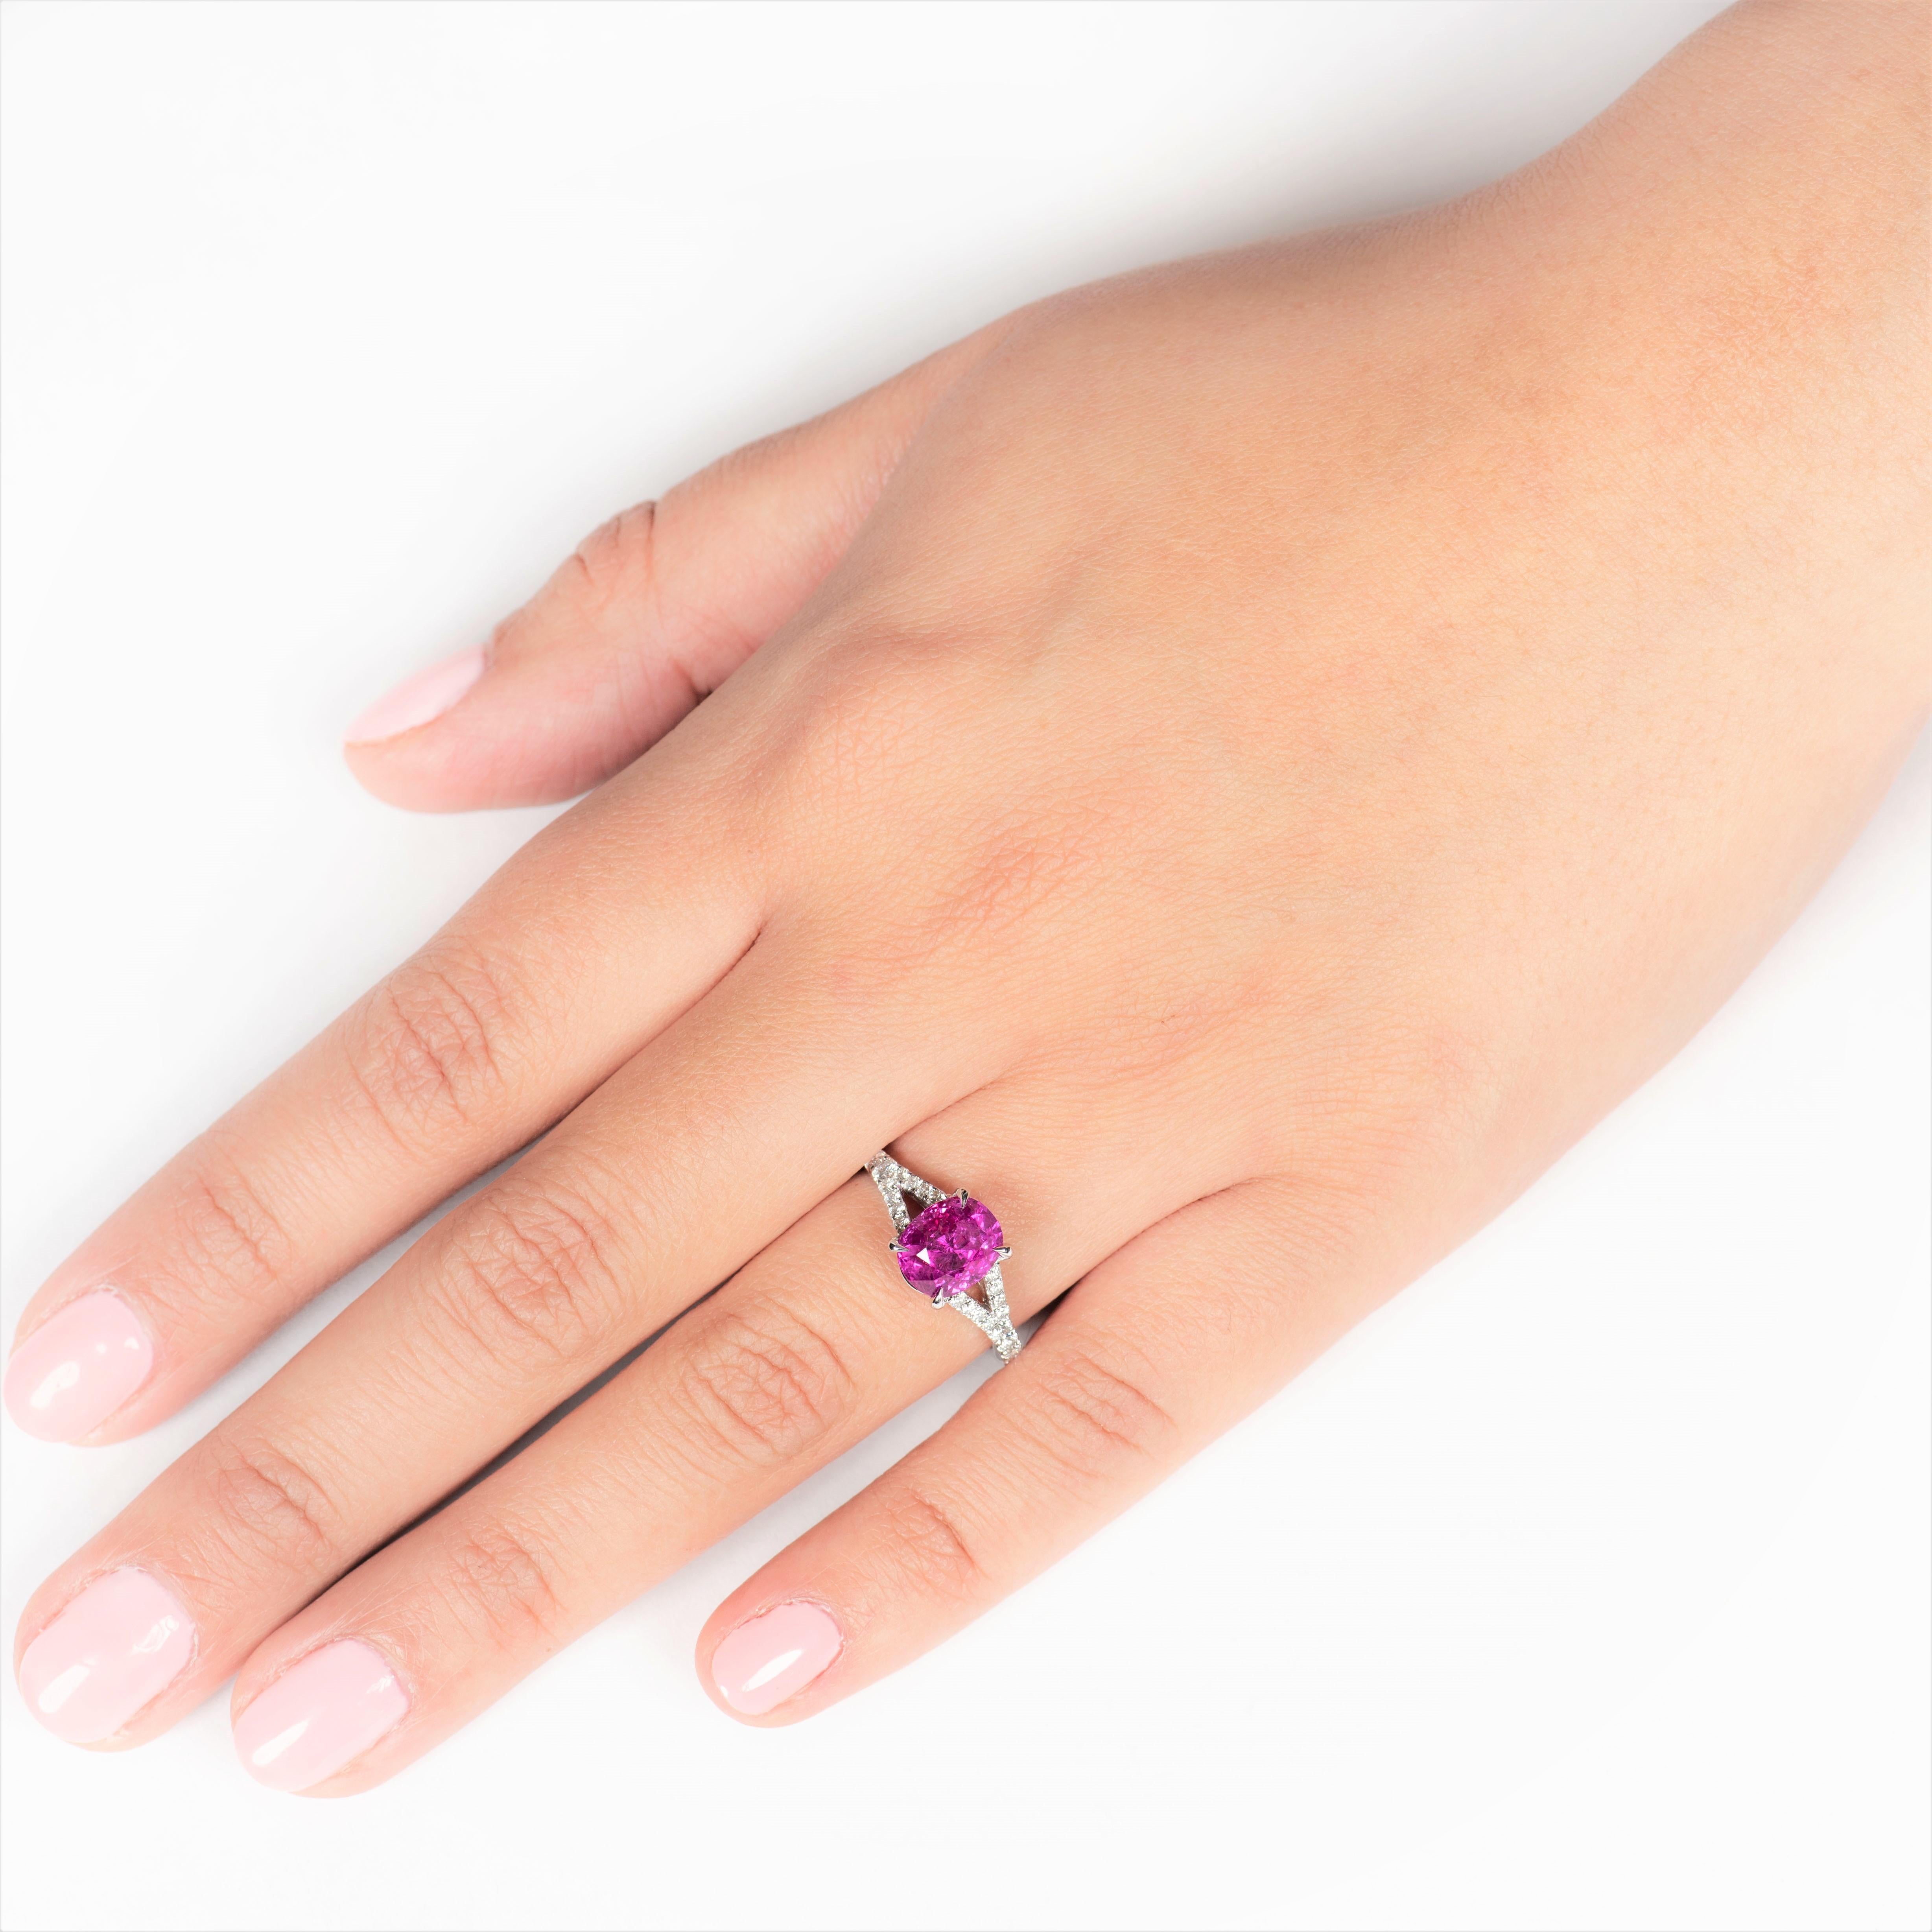 Women's 2.77 Carat Cushion Cut Natural Pink Burma Sapphire 'GIA' and Diamond Ring, 18K